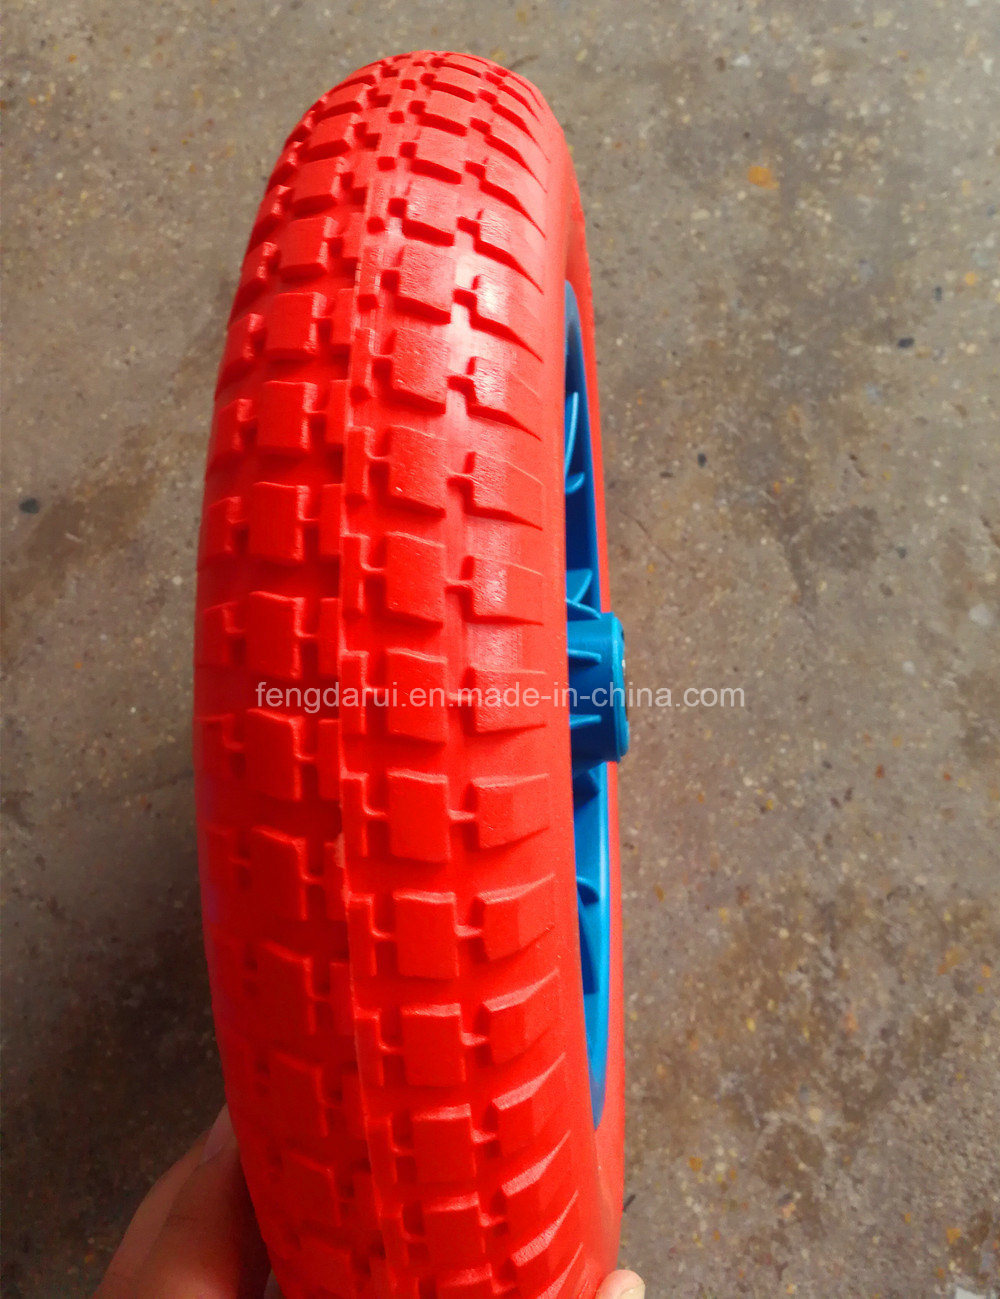 Red Ring Plastic Rim PU Foam Wheel (13